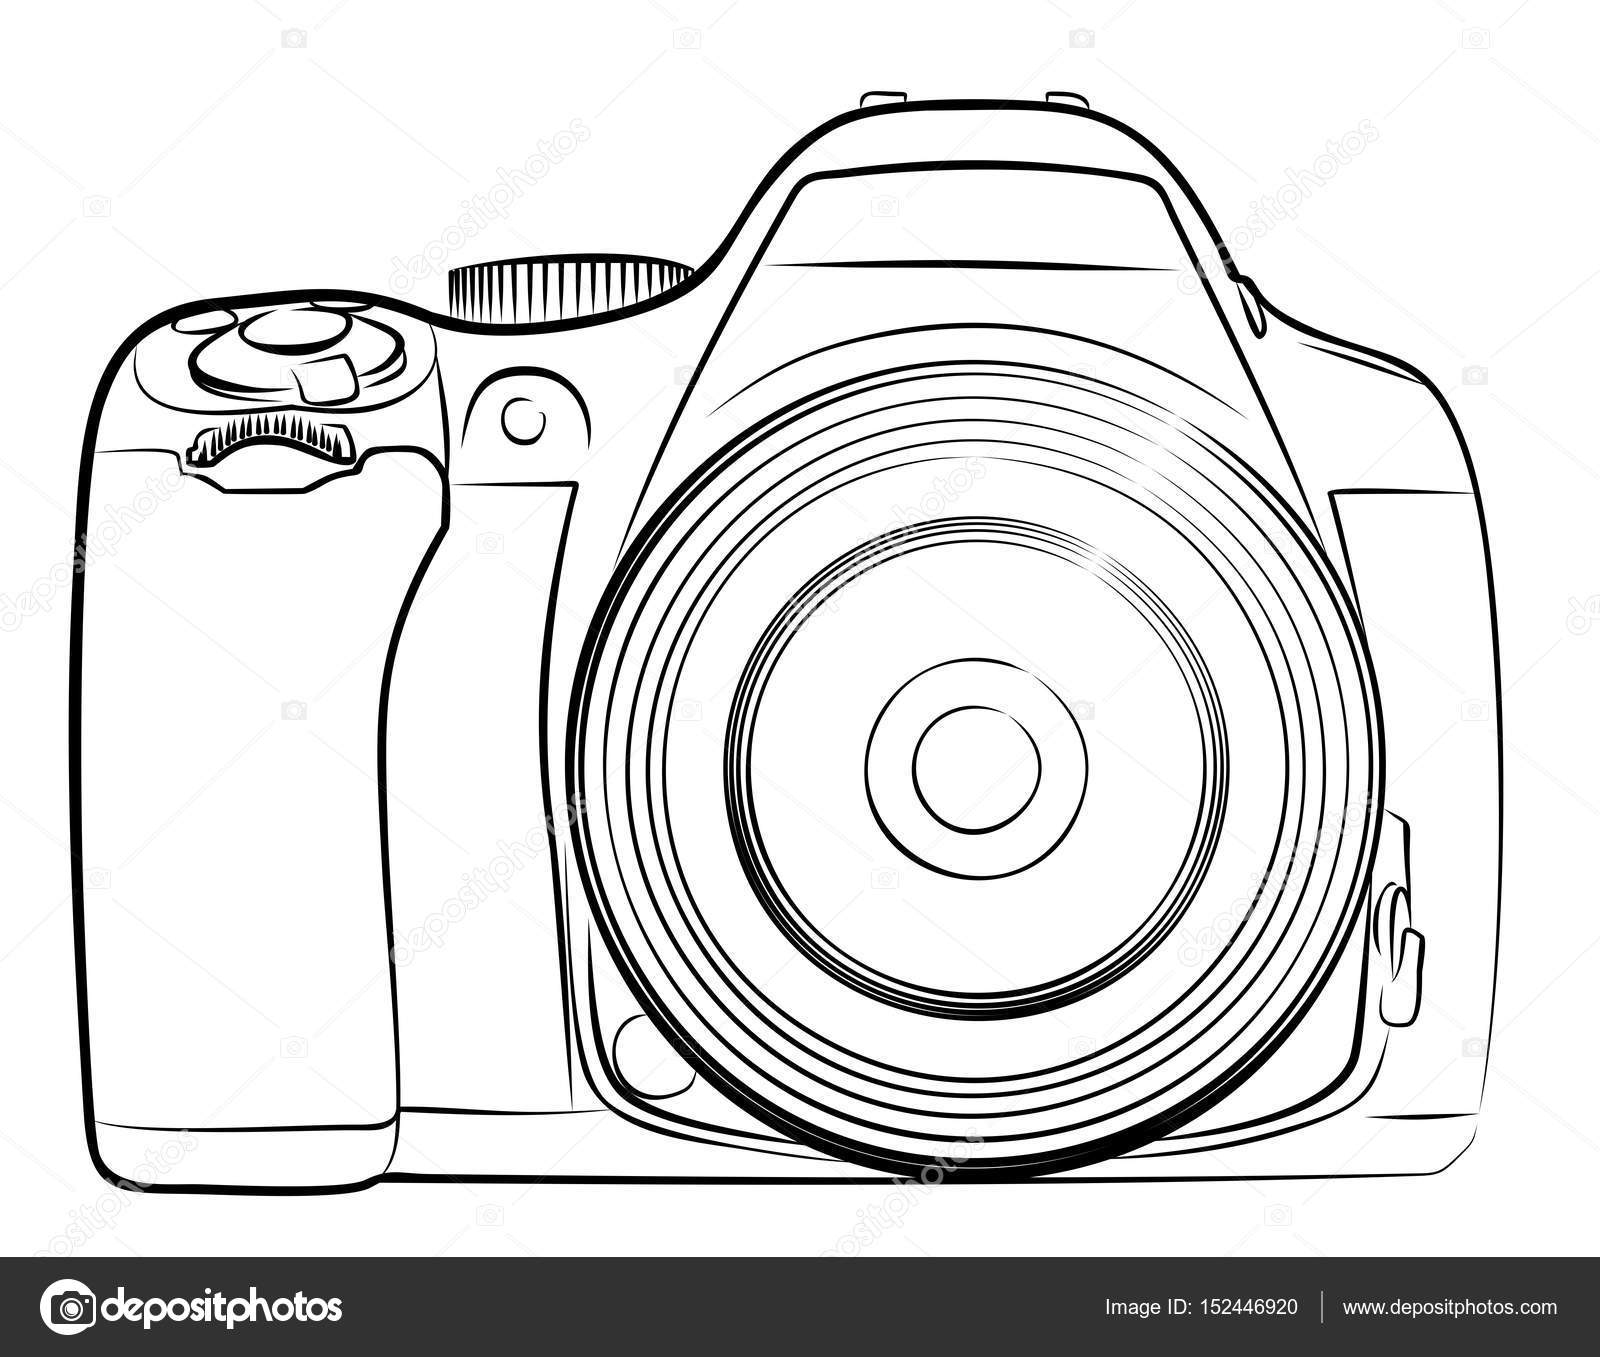 Camera Drawing Vector Stock Vector Illustration and Royalty Free Camera  Drawing Vector Clipart